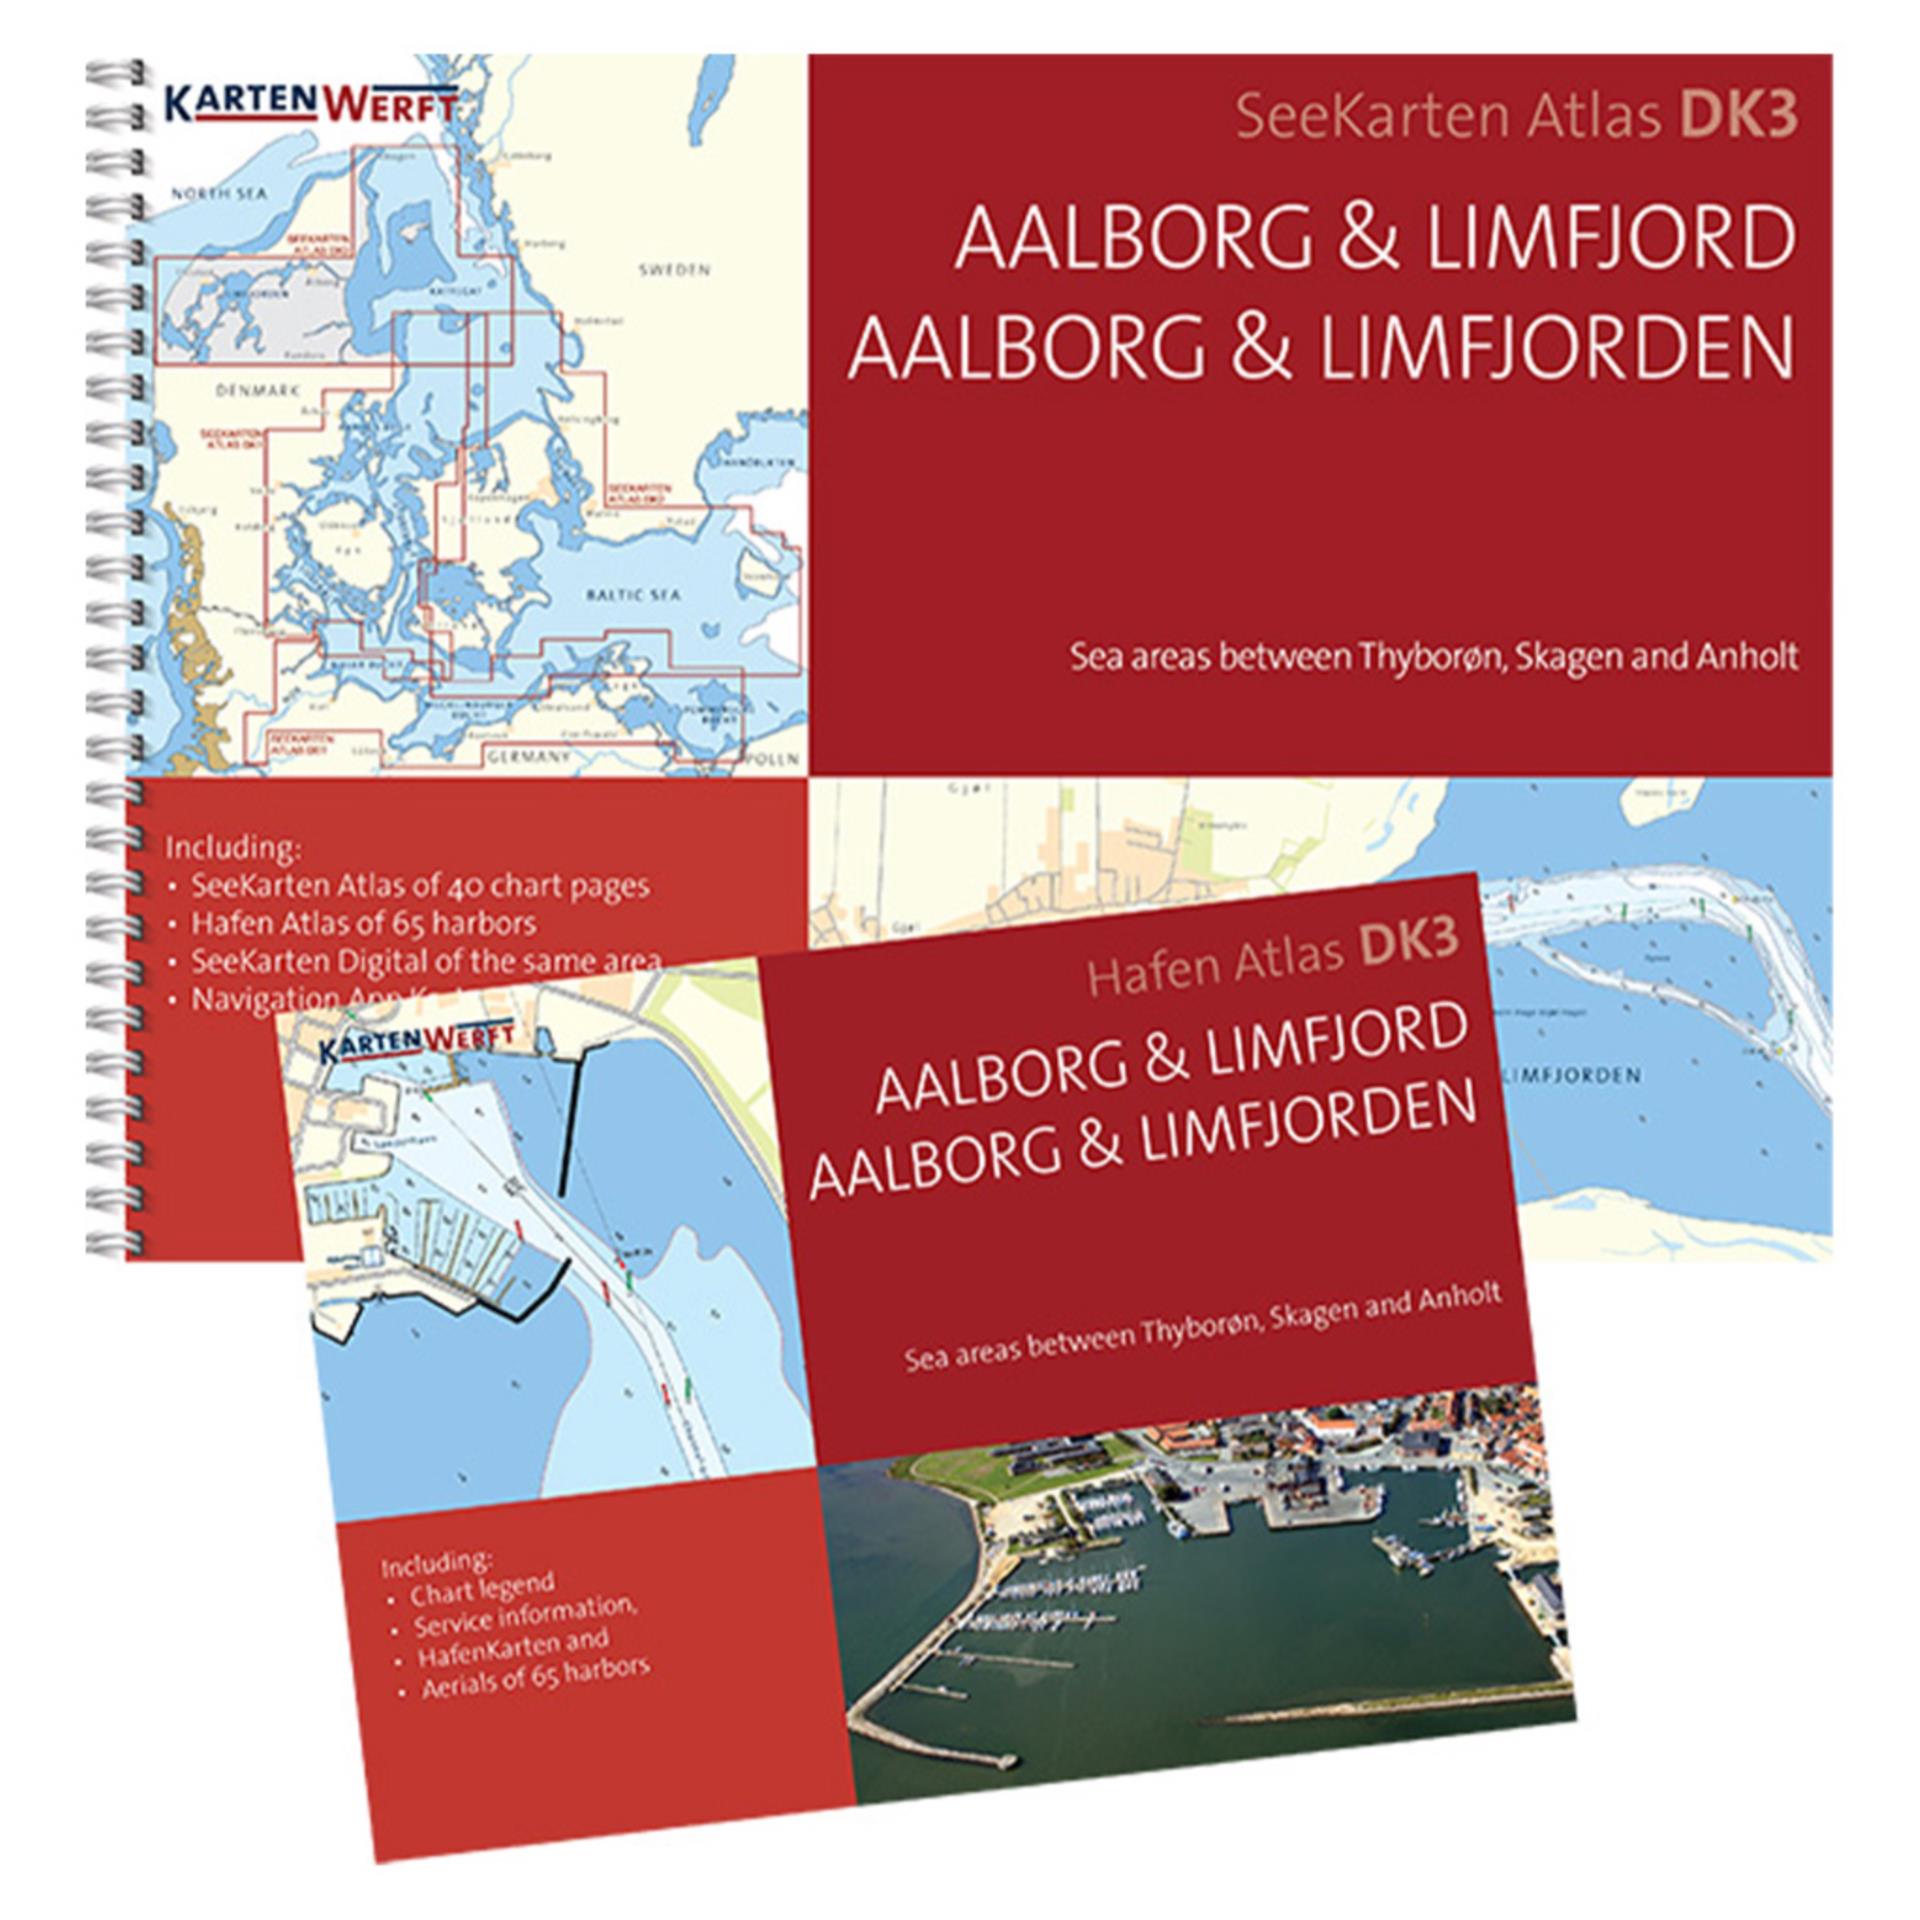 Kartenwerft SeeKarten Atlas DK3 | Allborg & Limfjord